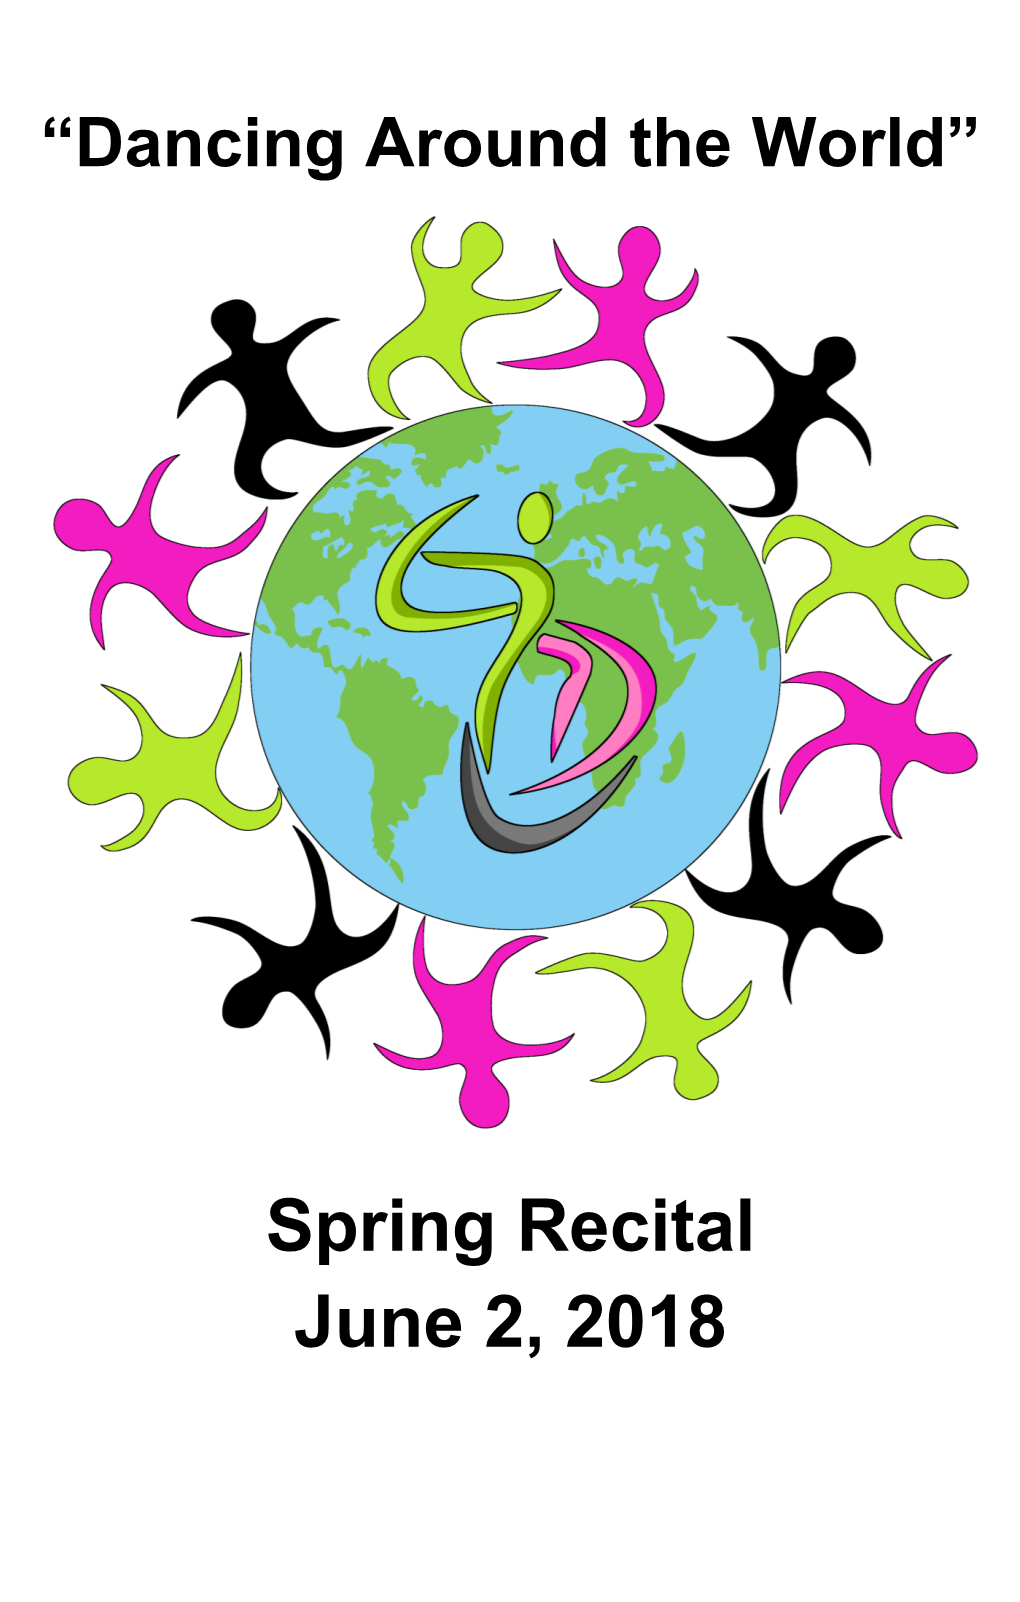 Spring Recital June 2, 2018